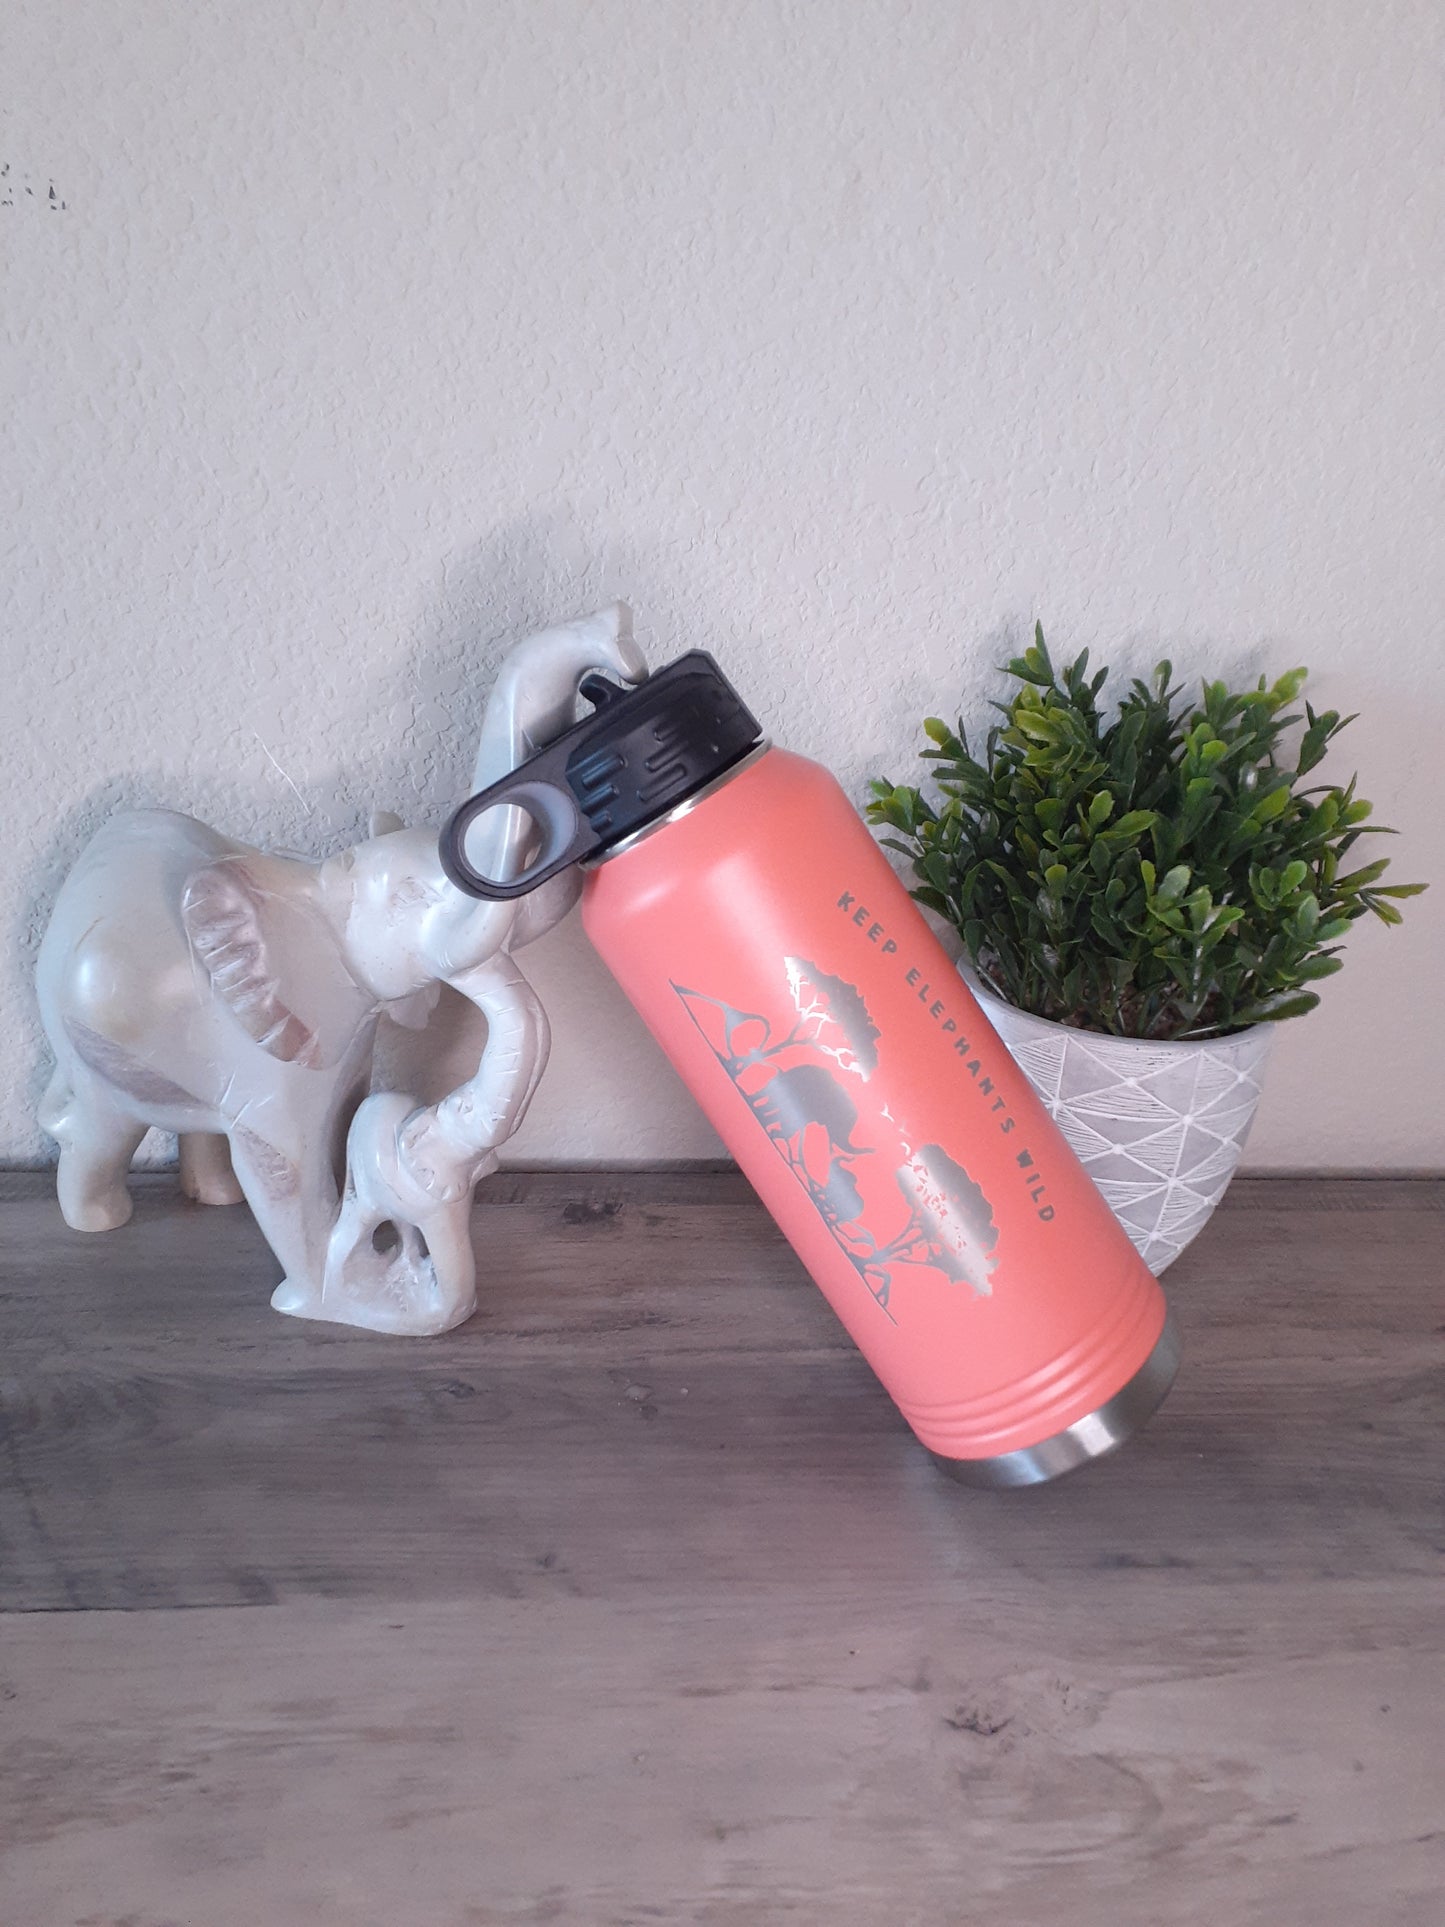 Keep Elephants Wild Stainless Steel Water Bottle - 32 oz. Tumbler